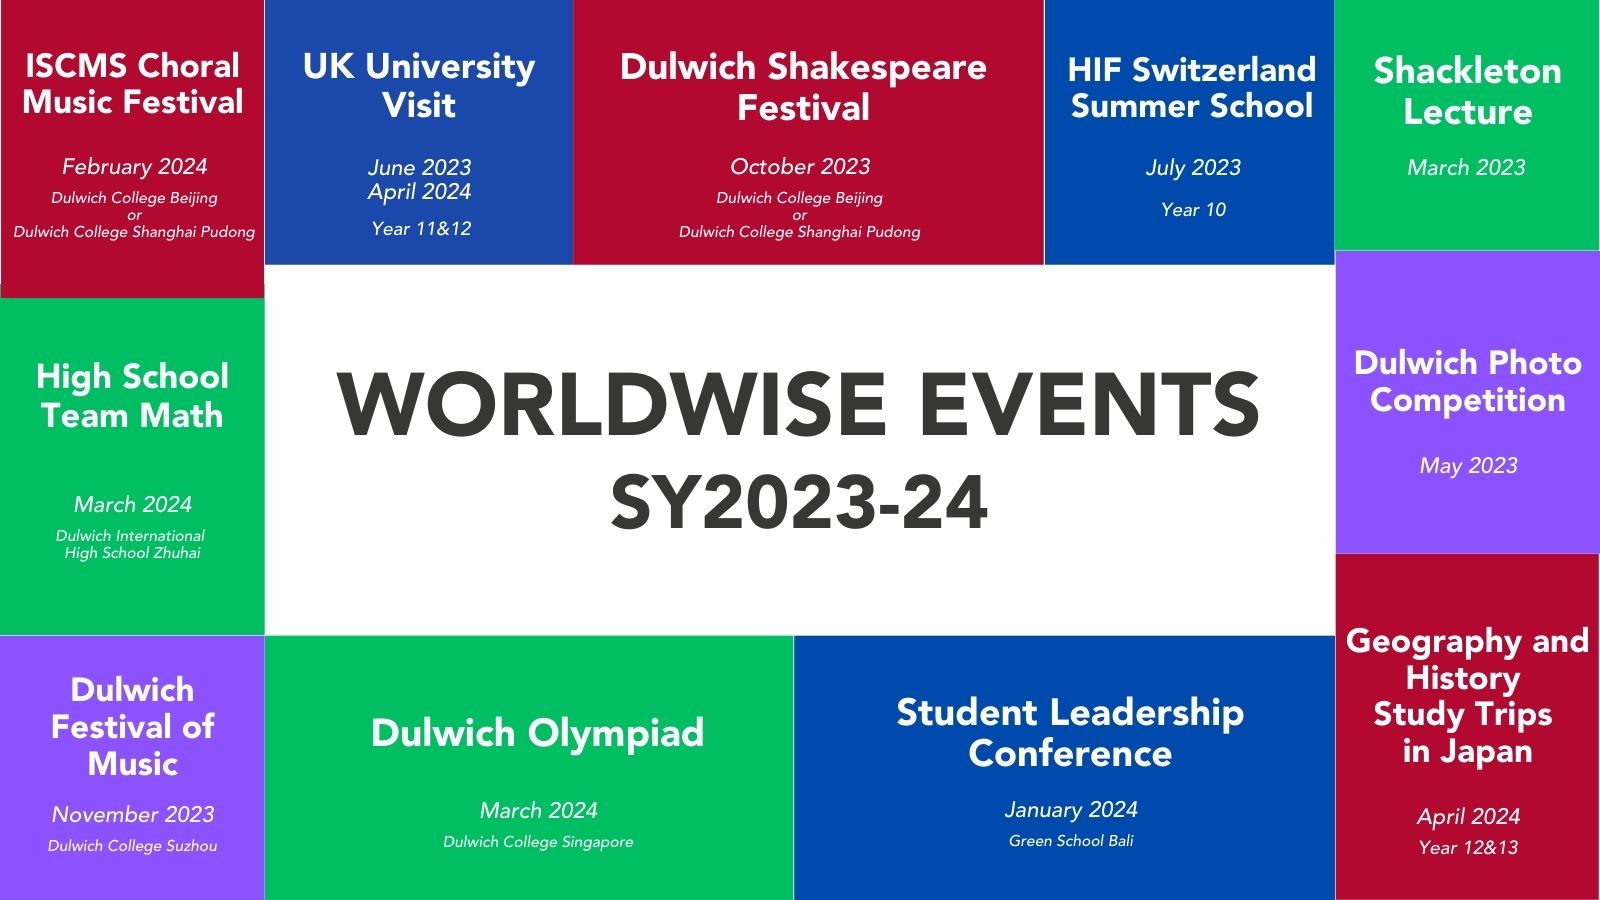 worldwise-event-dulwich-2023-24-eng